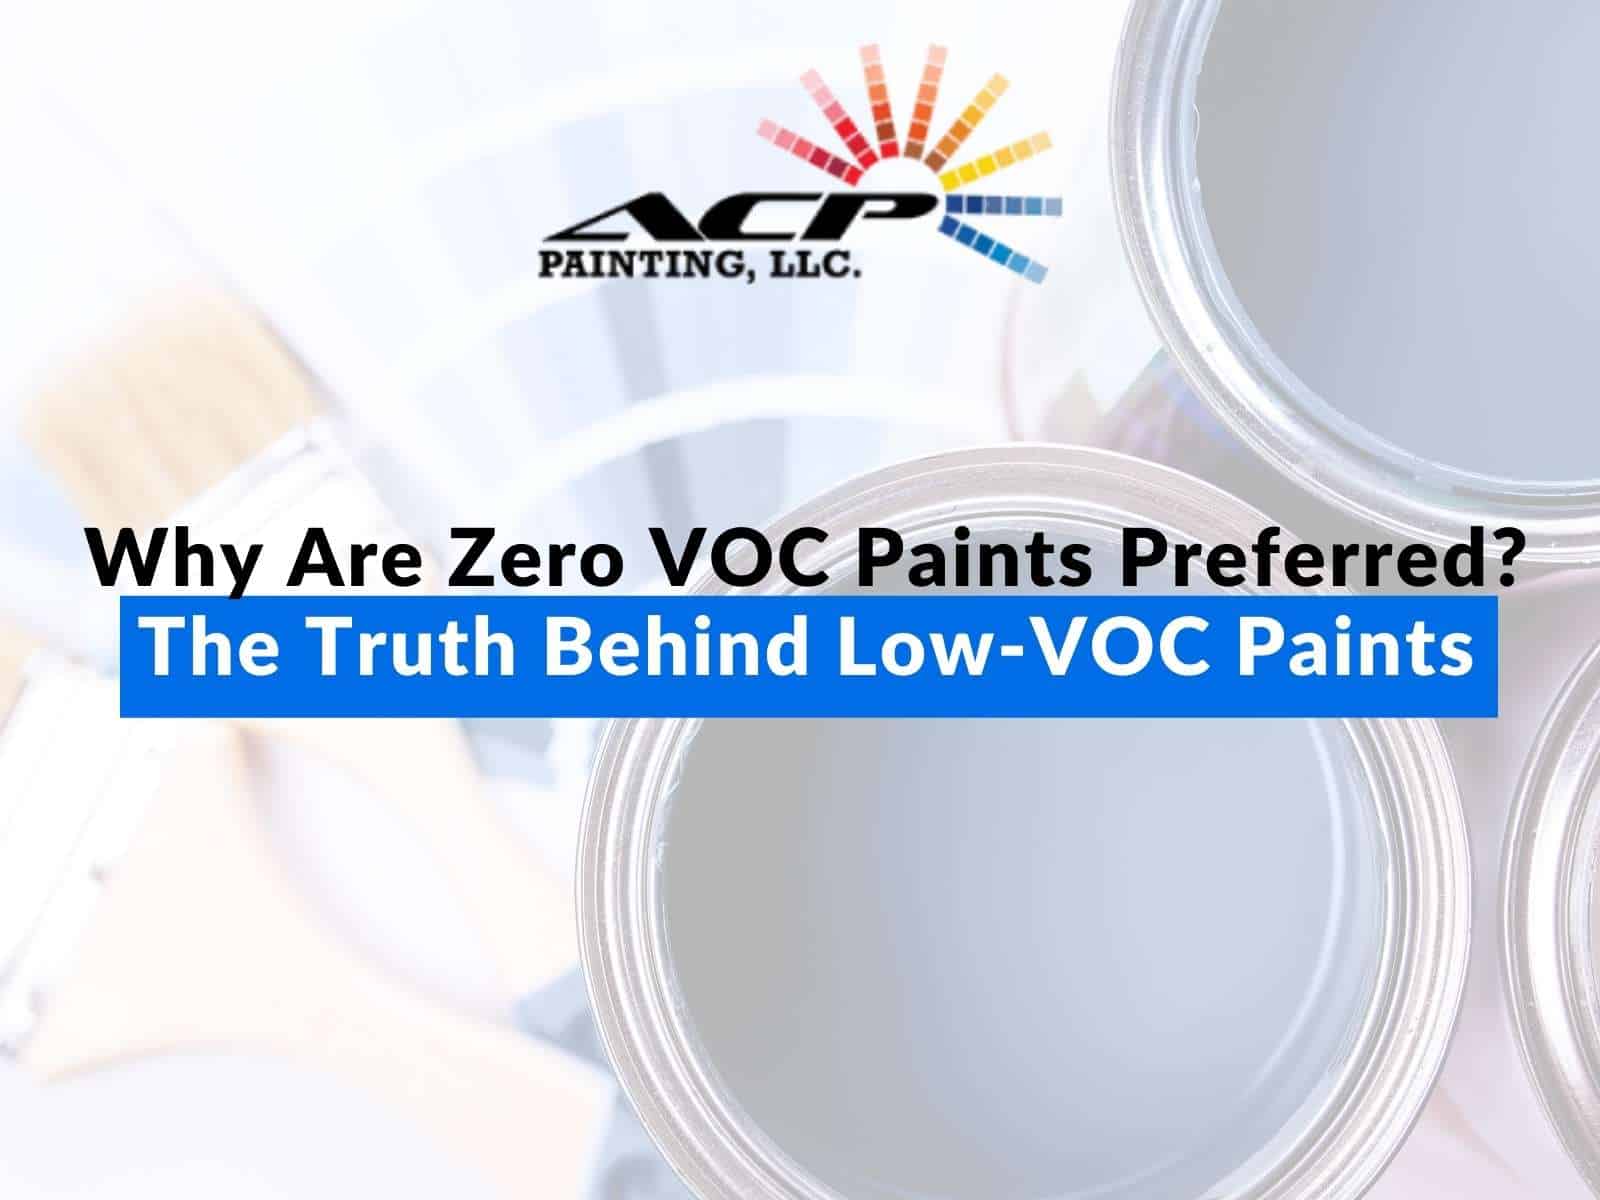 Are Zero VOC Paints more environmentally friendly?